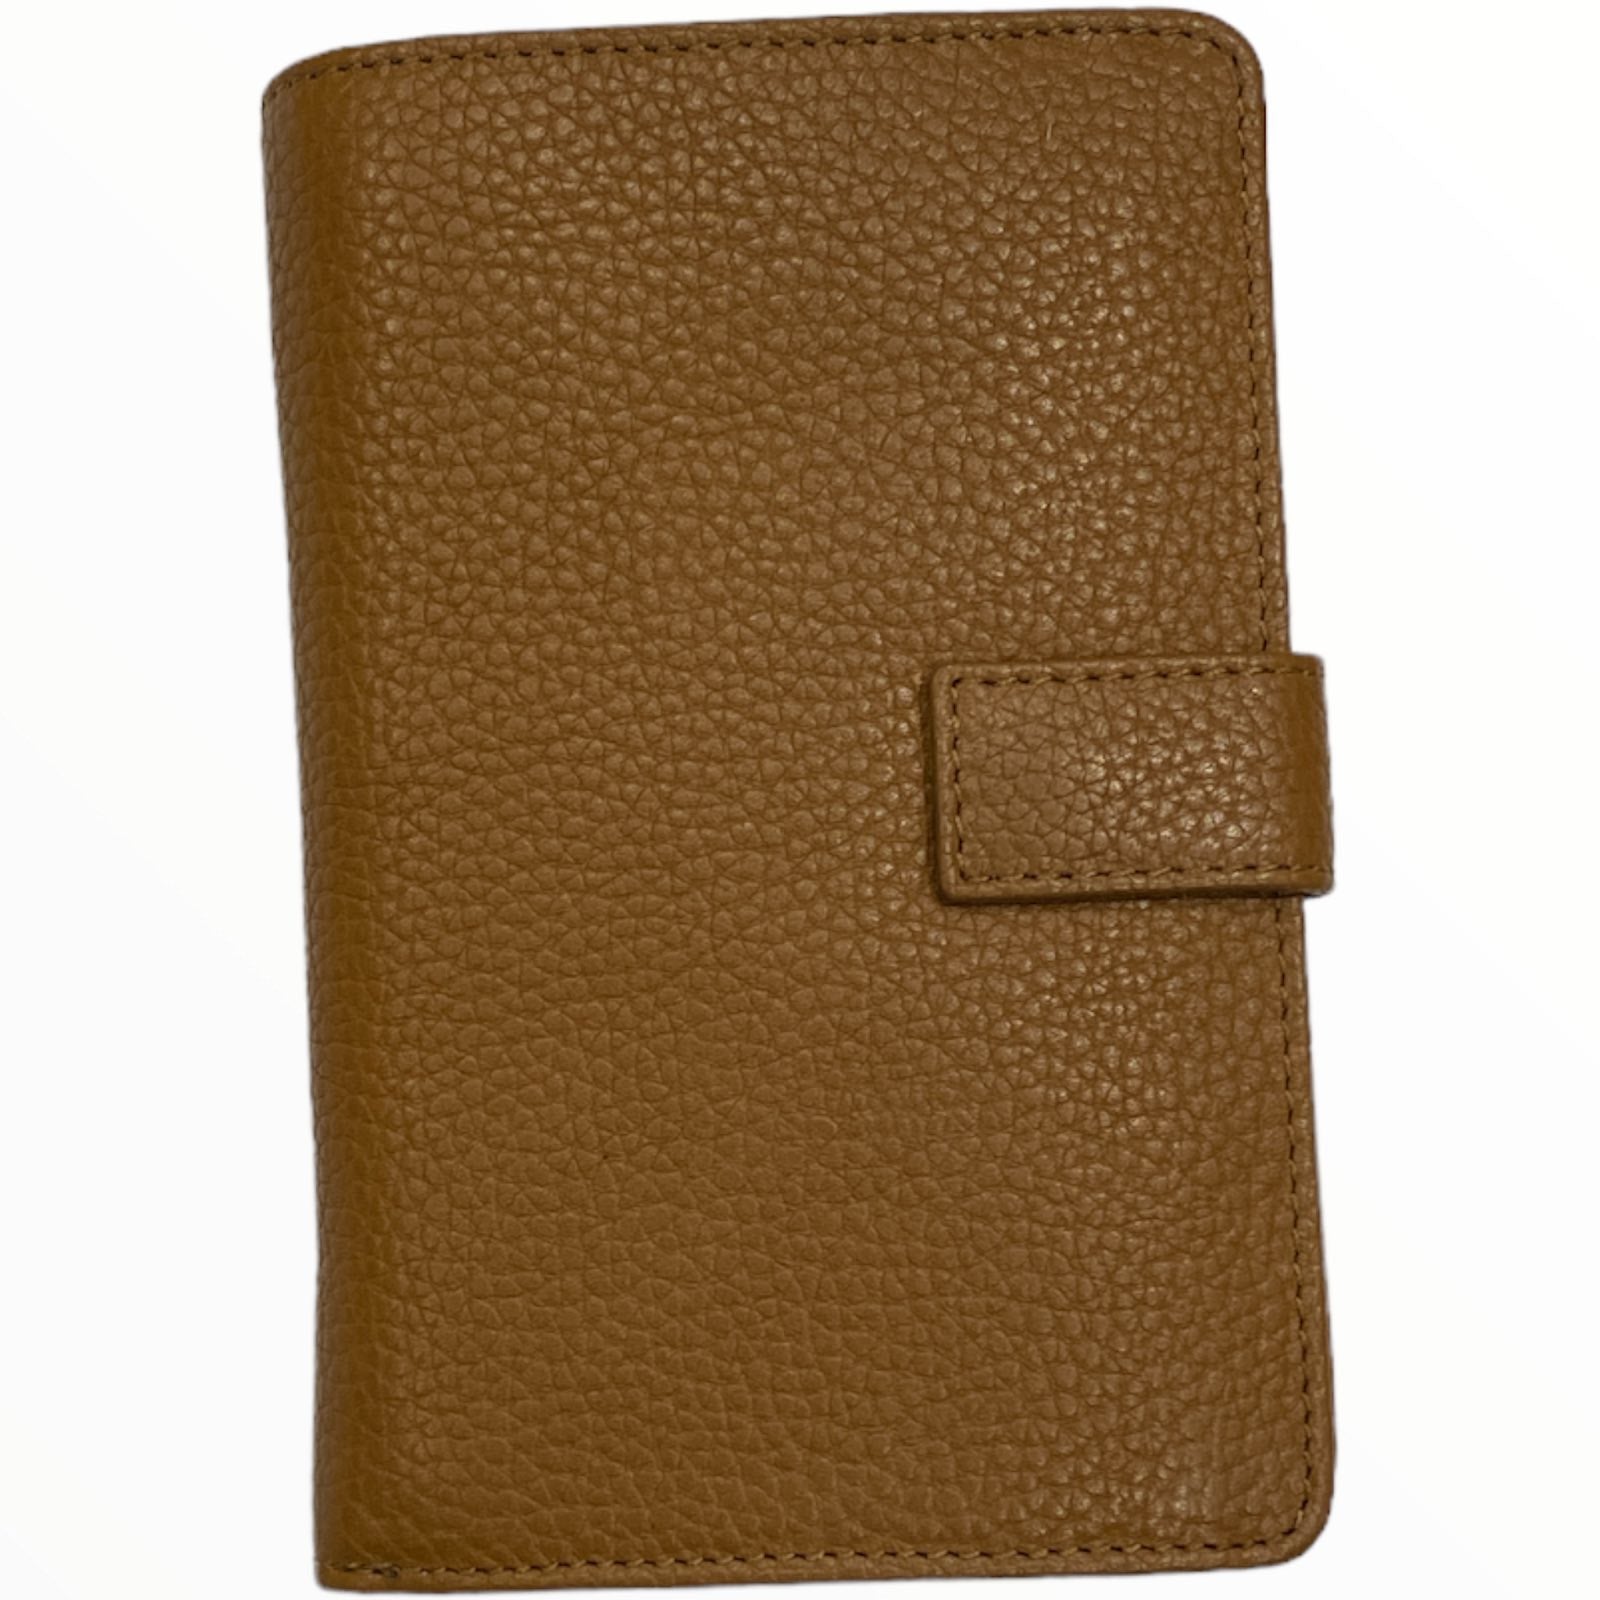 Taba leather wallet. Medium size